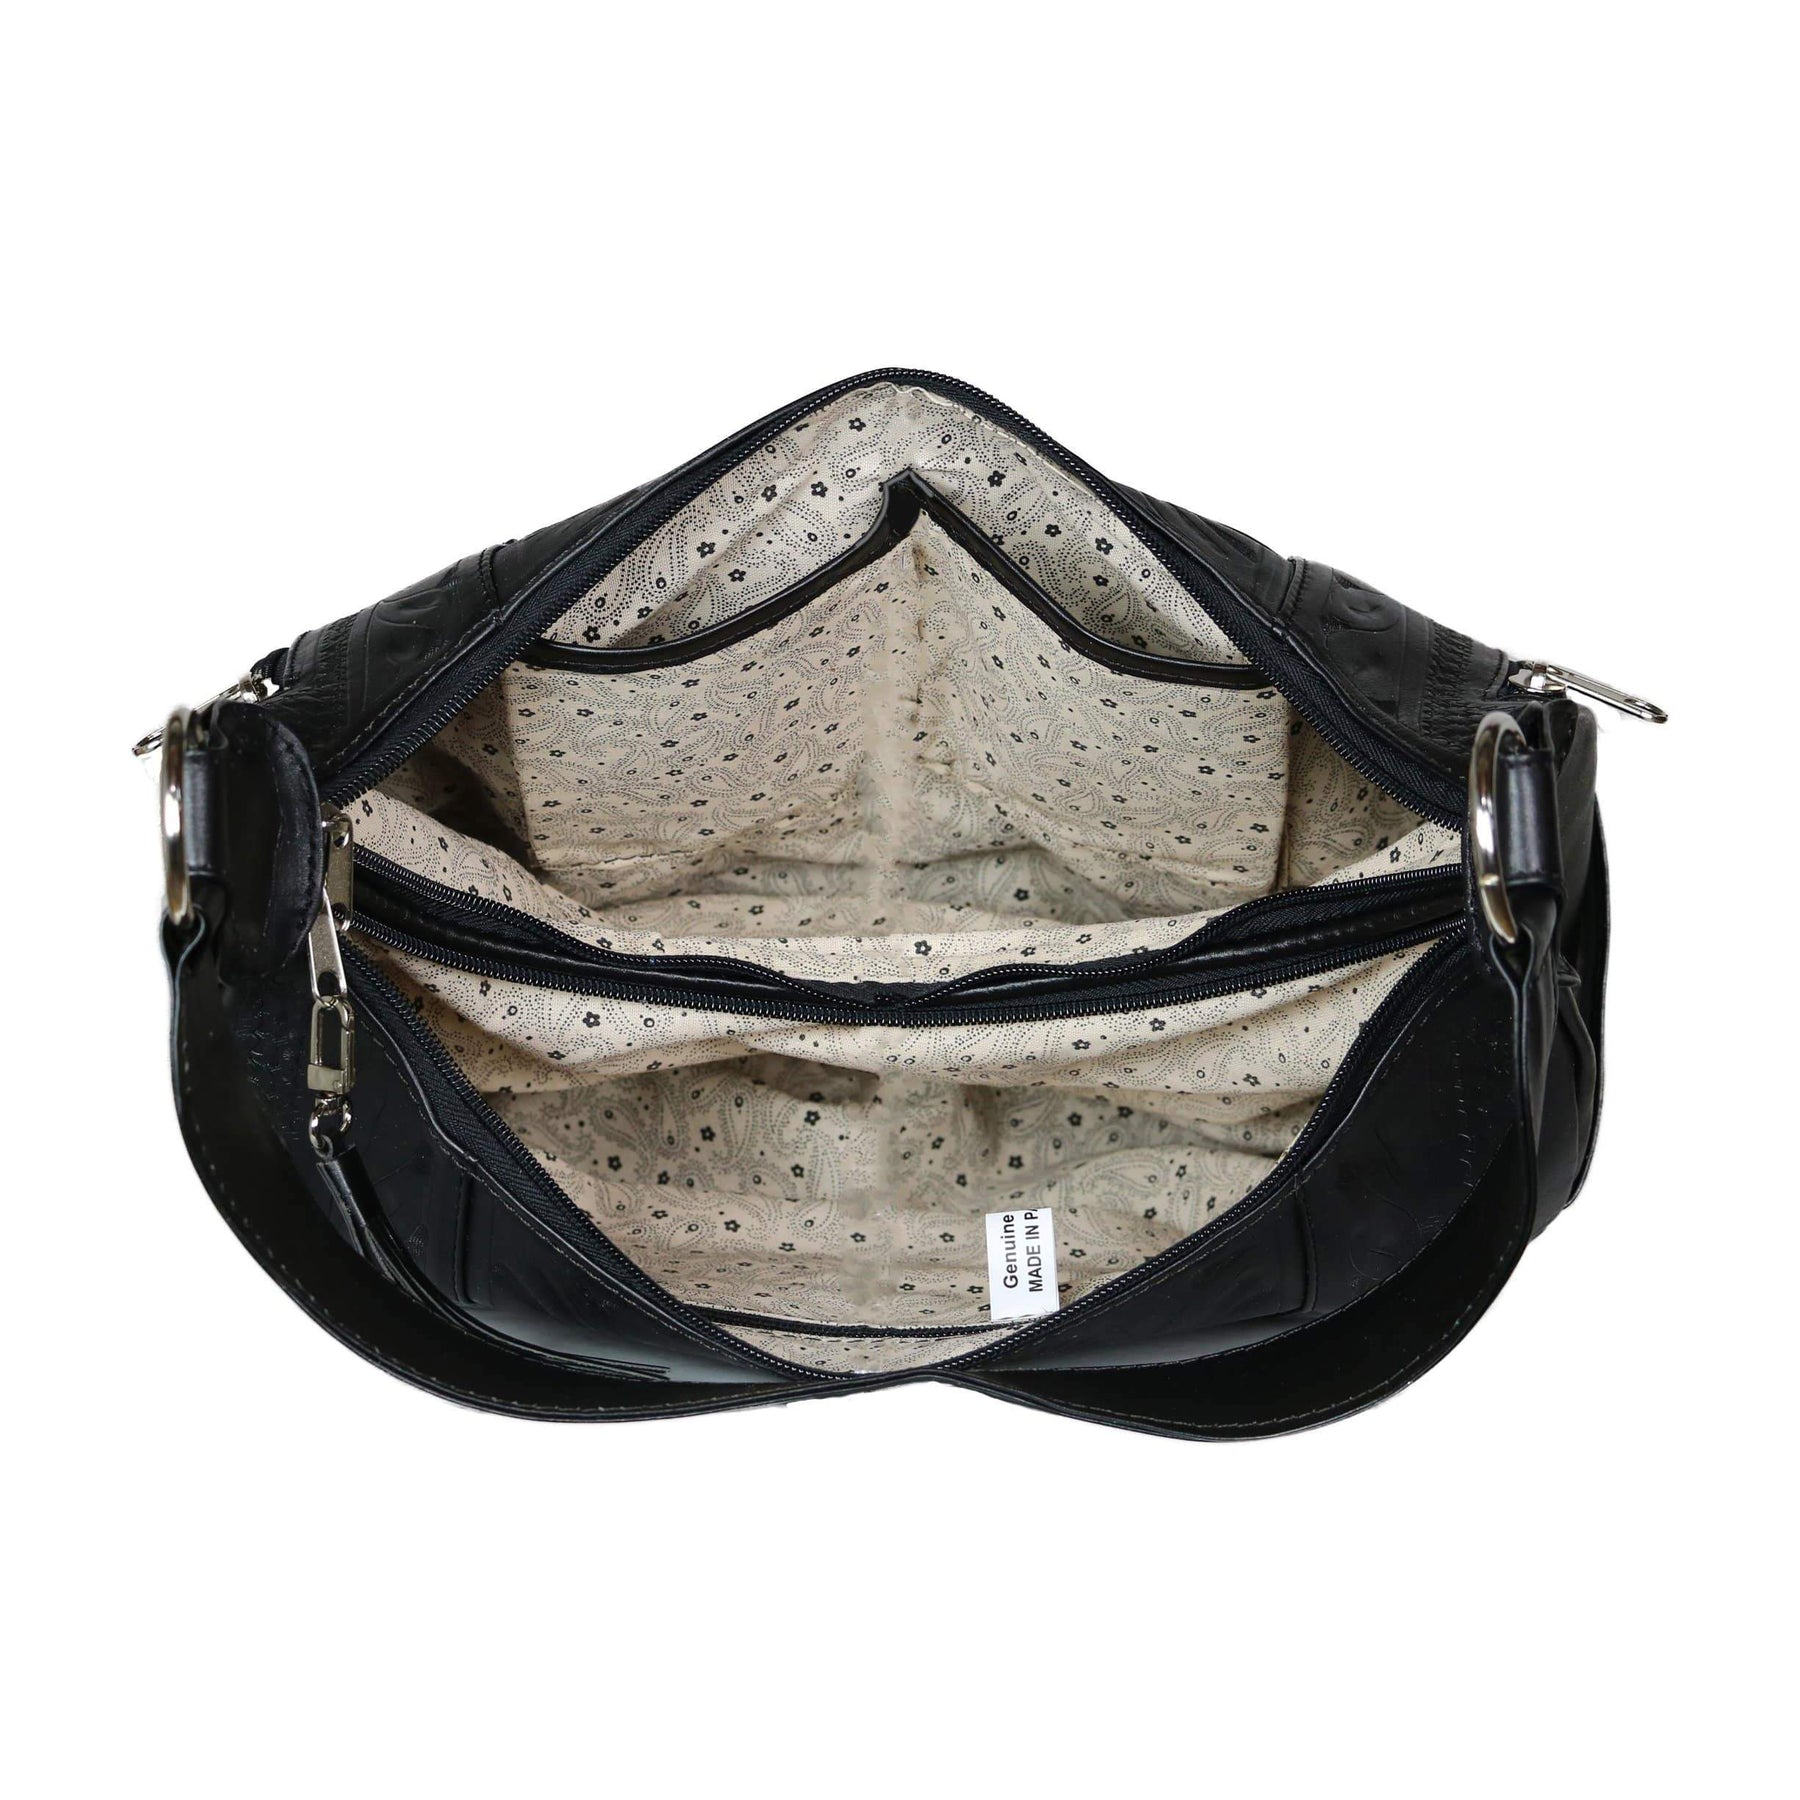 Pahajim Women Leather Top Handle Handbags Satchel Purse Shoulder Bag Tote  Bag (Black) : Amazon.in: Shoes & Handbags